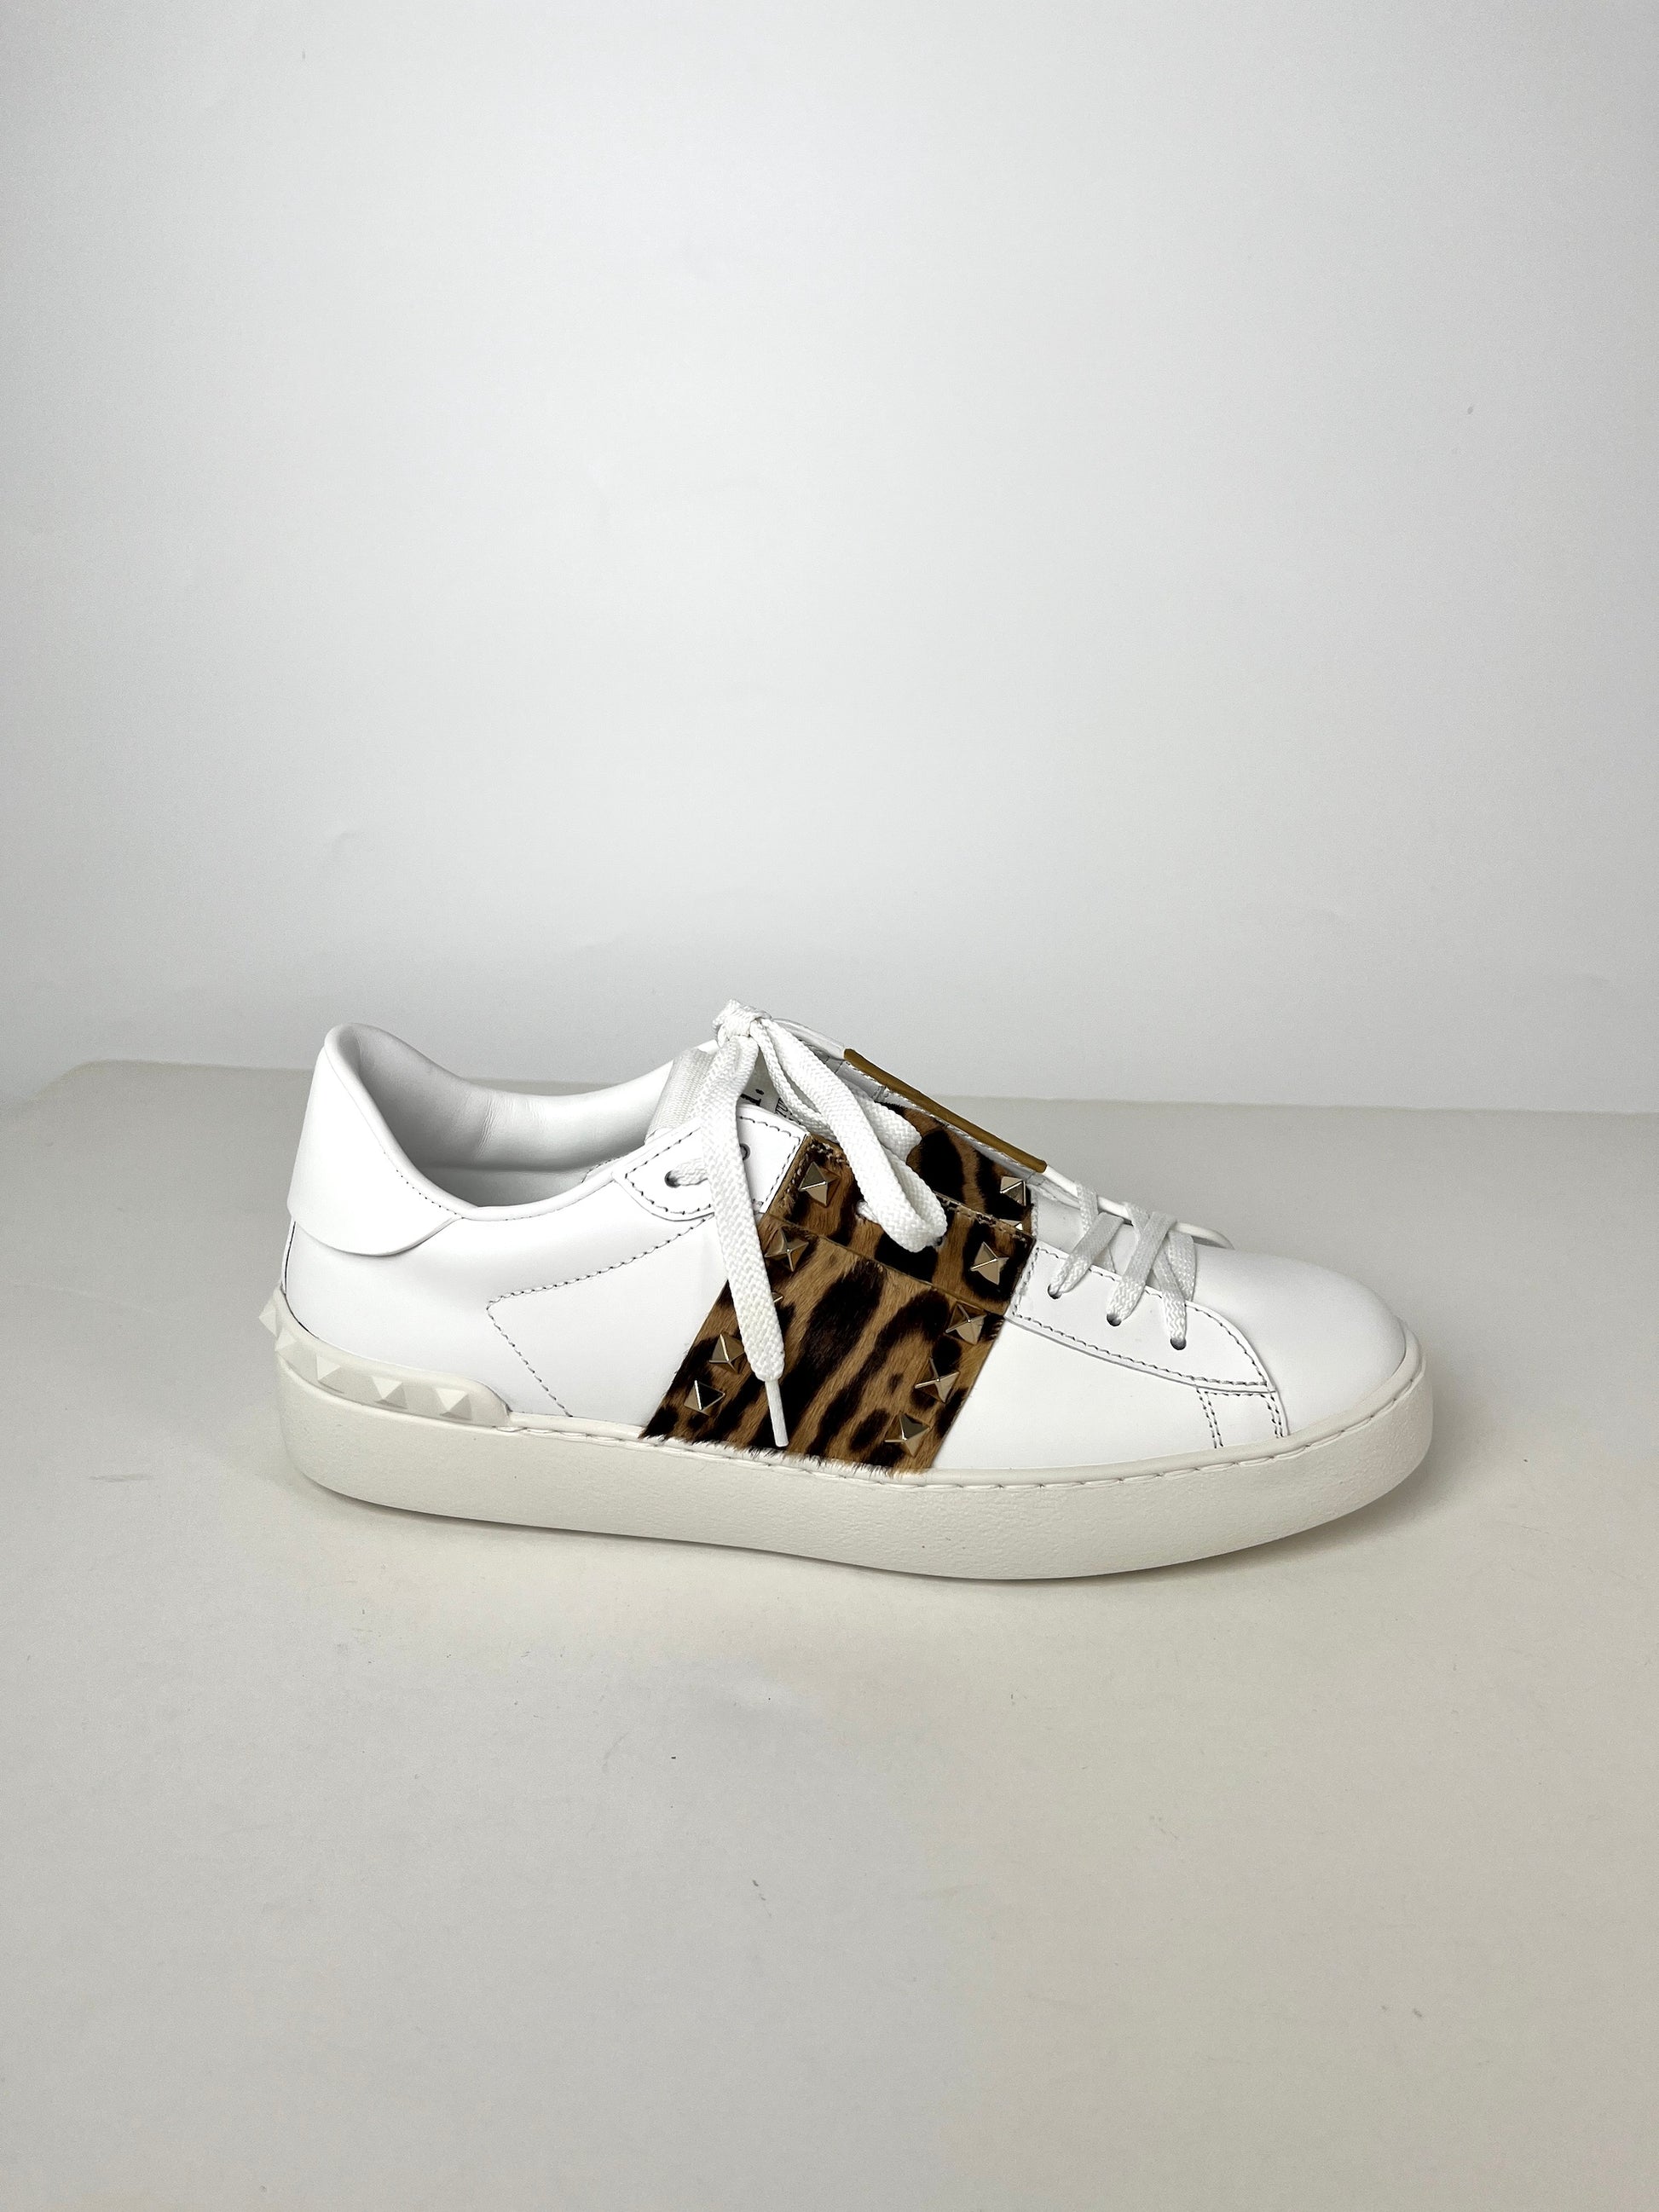 New Valentino Garavani Untitled White Animal Print Rockstud Leather Sneakers 40 9.5